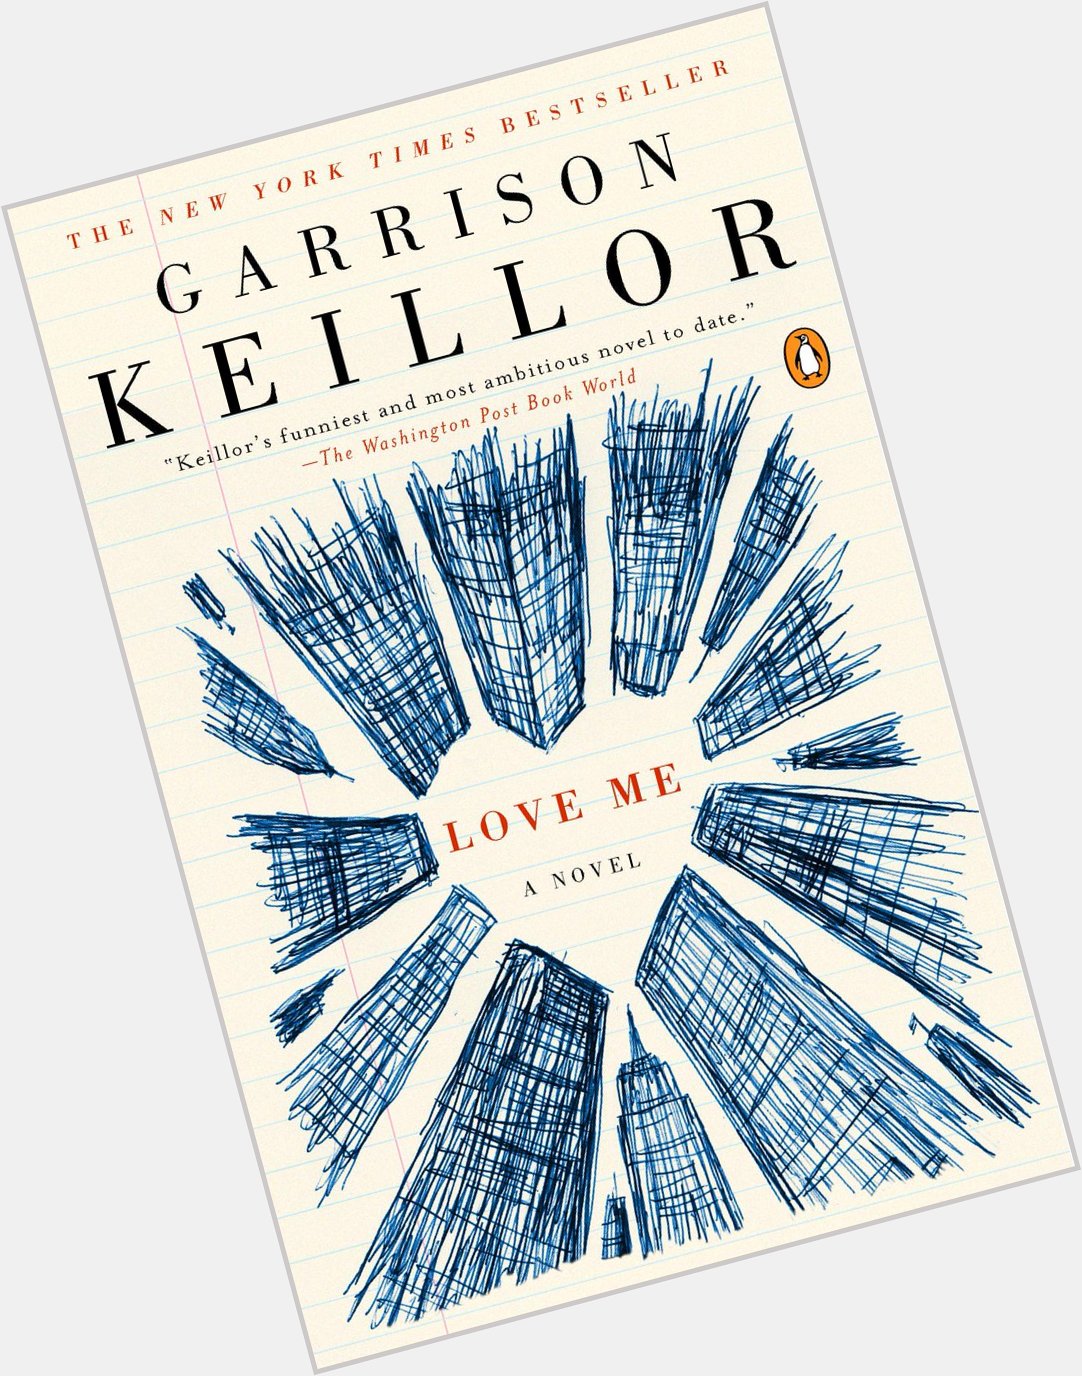  Happy birthday to beloved US writer/radio personality Garrison Keillor ! 